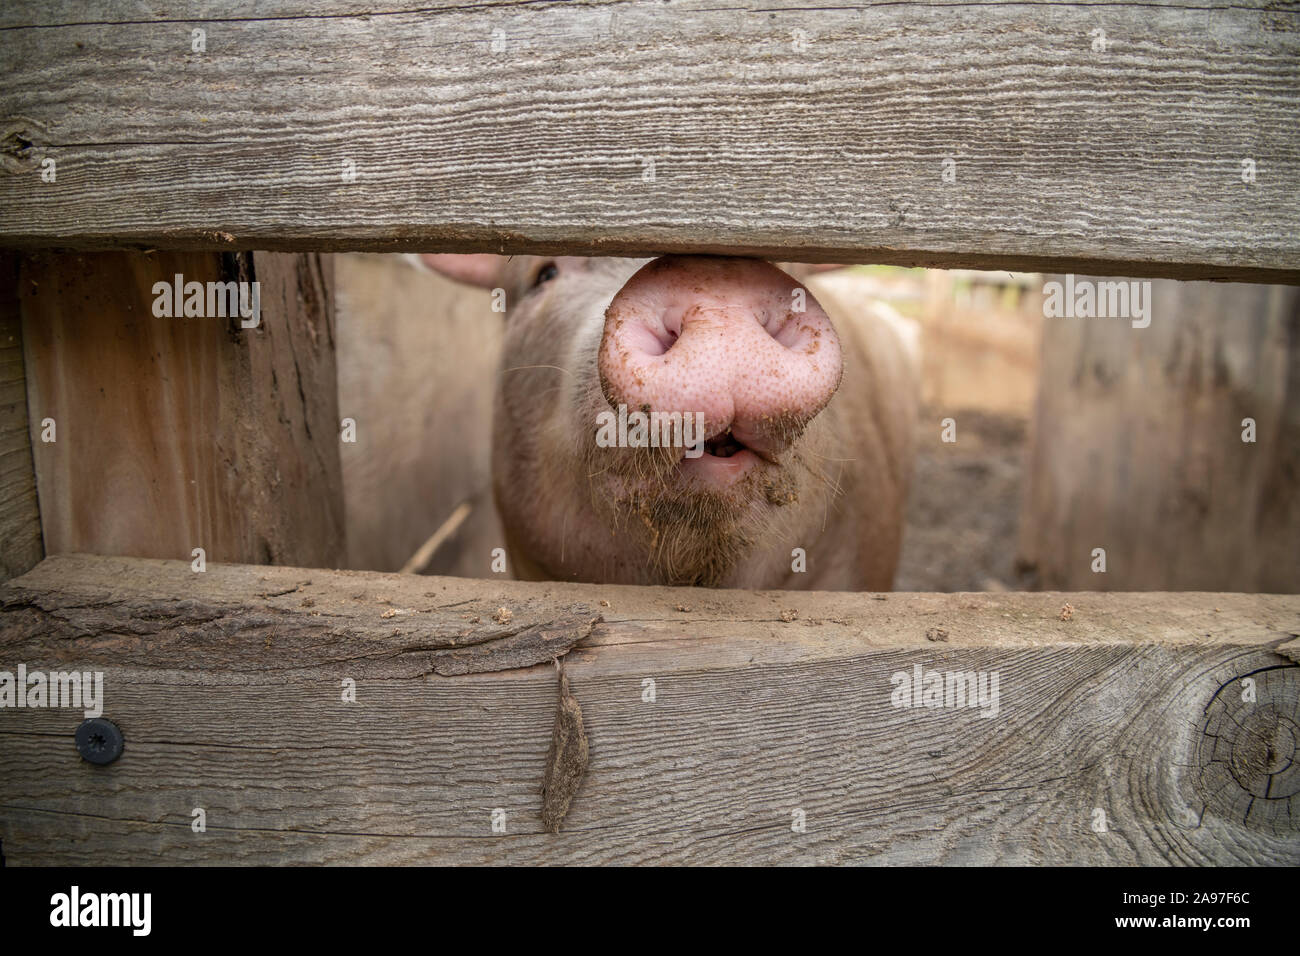 Hocico de cerdo a través de tableros de orzuelo pen. Foto de stock